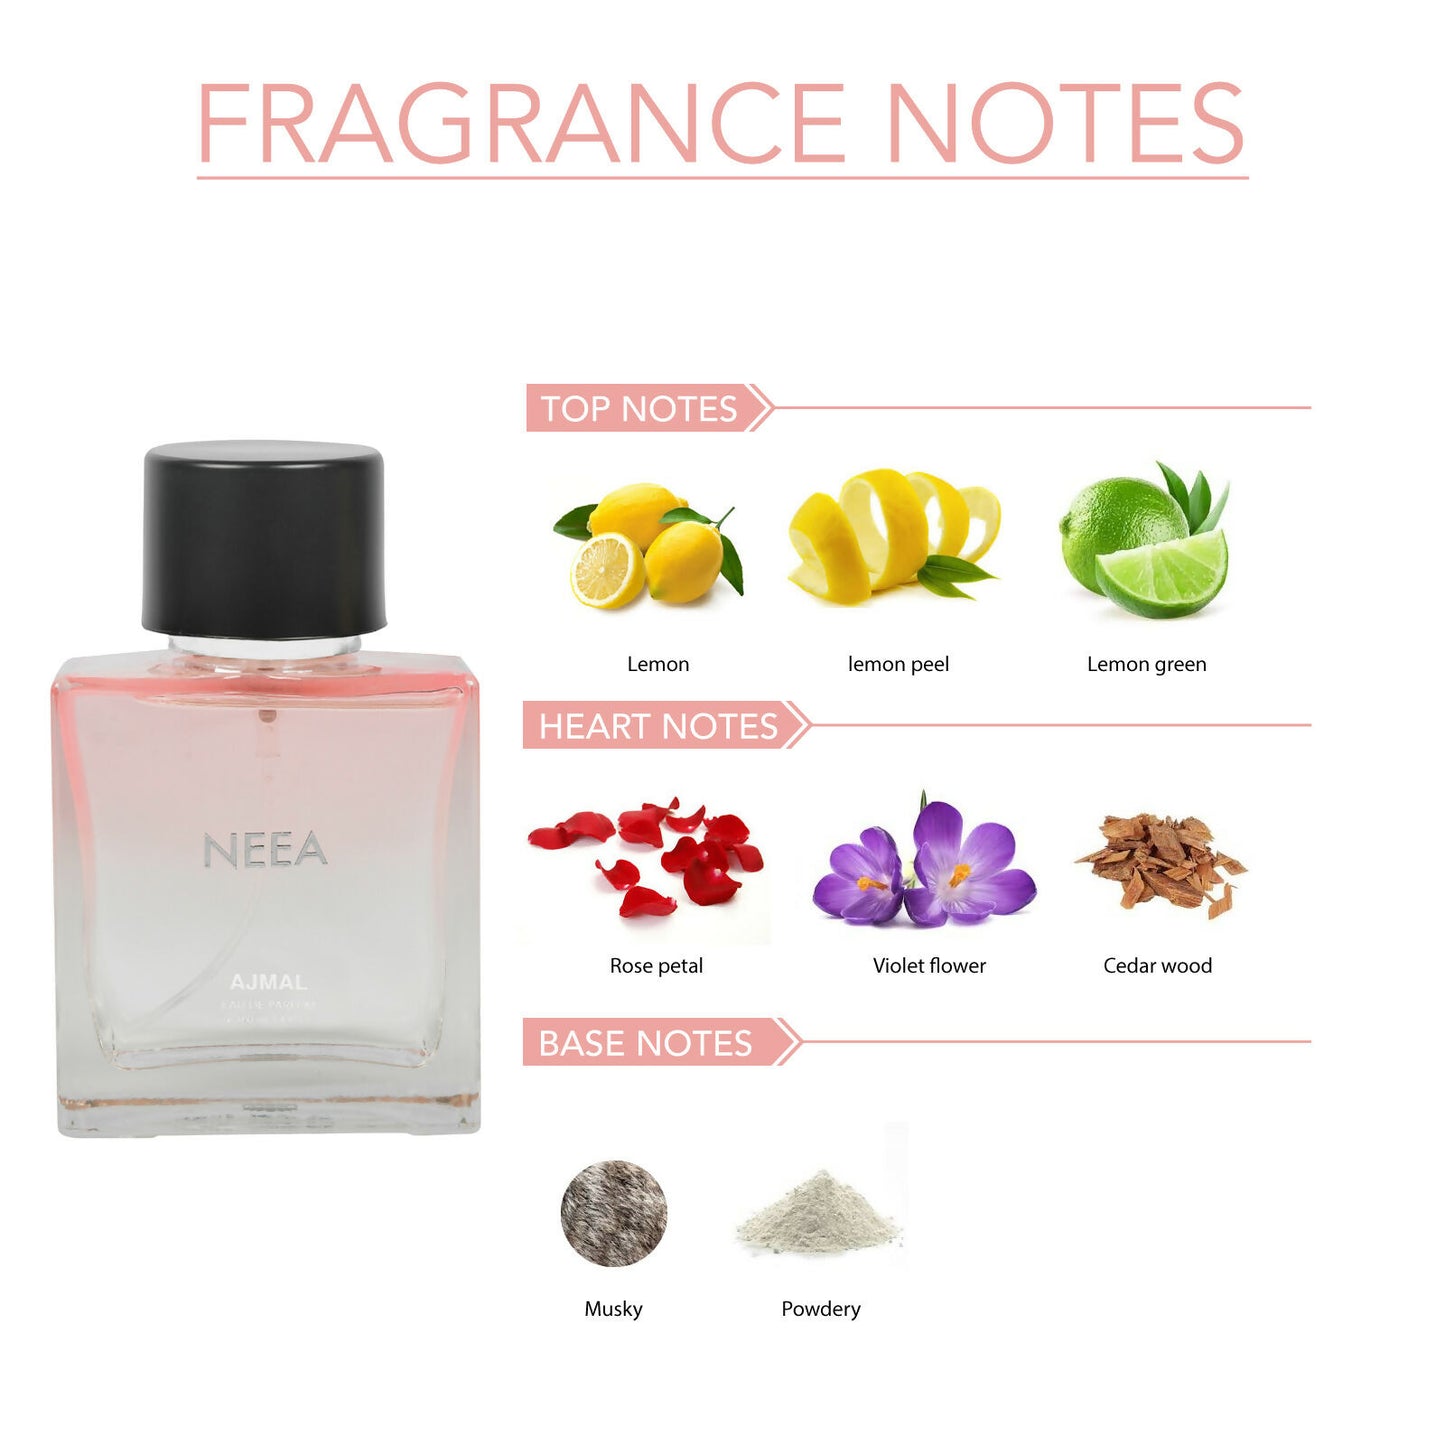 Ajmal Neea Eau De Perfume Floral Perfume 100ML Long Lasting Scent Spray Party Wear Gift For Women.